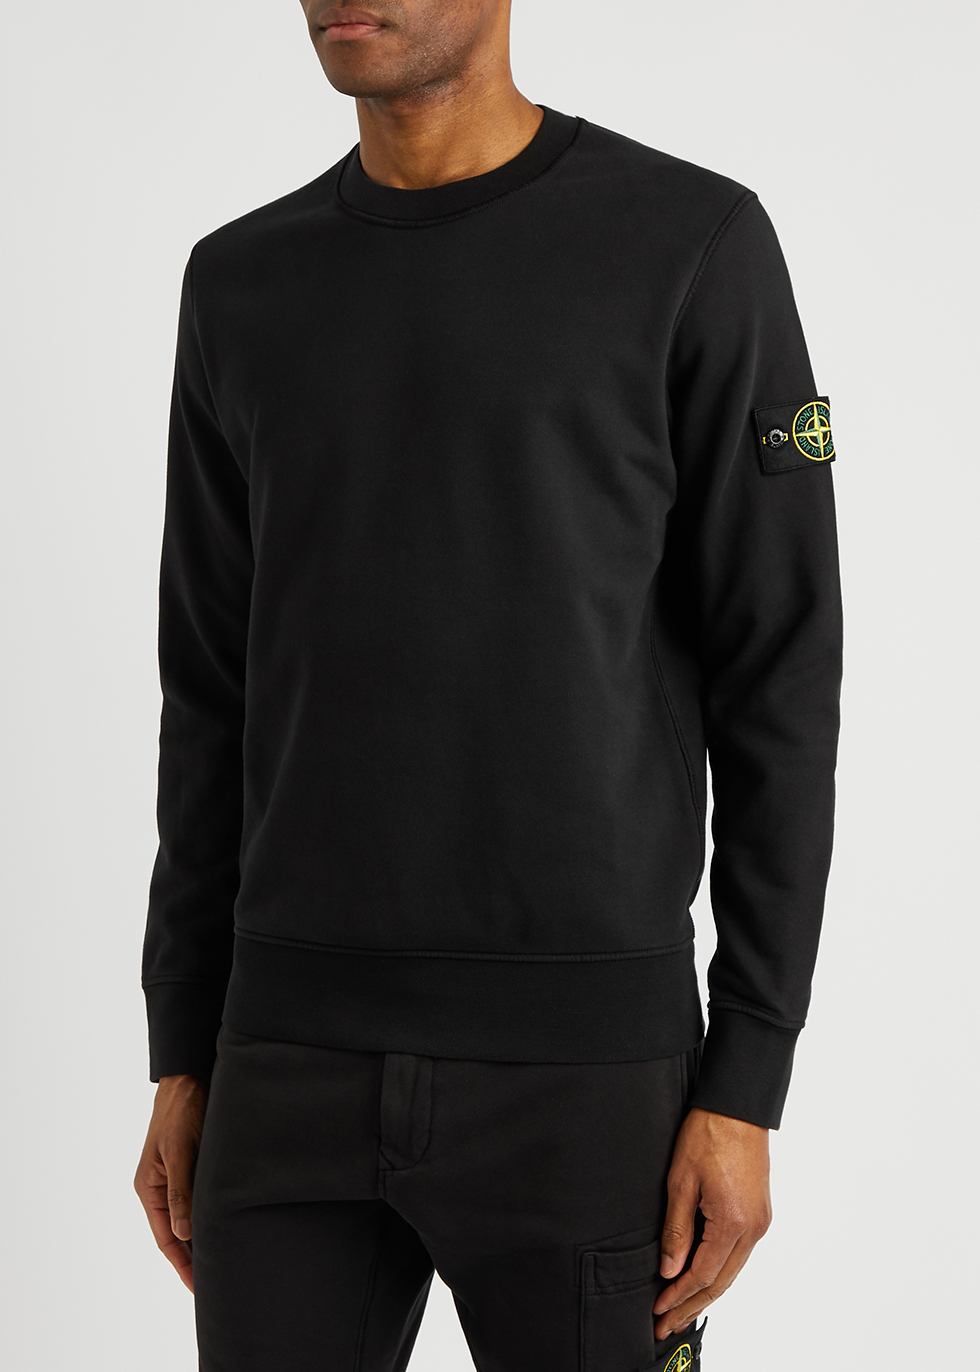 Stone Island Black logo cotton sweatshirt - Harvey Nichols